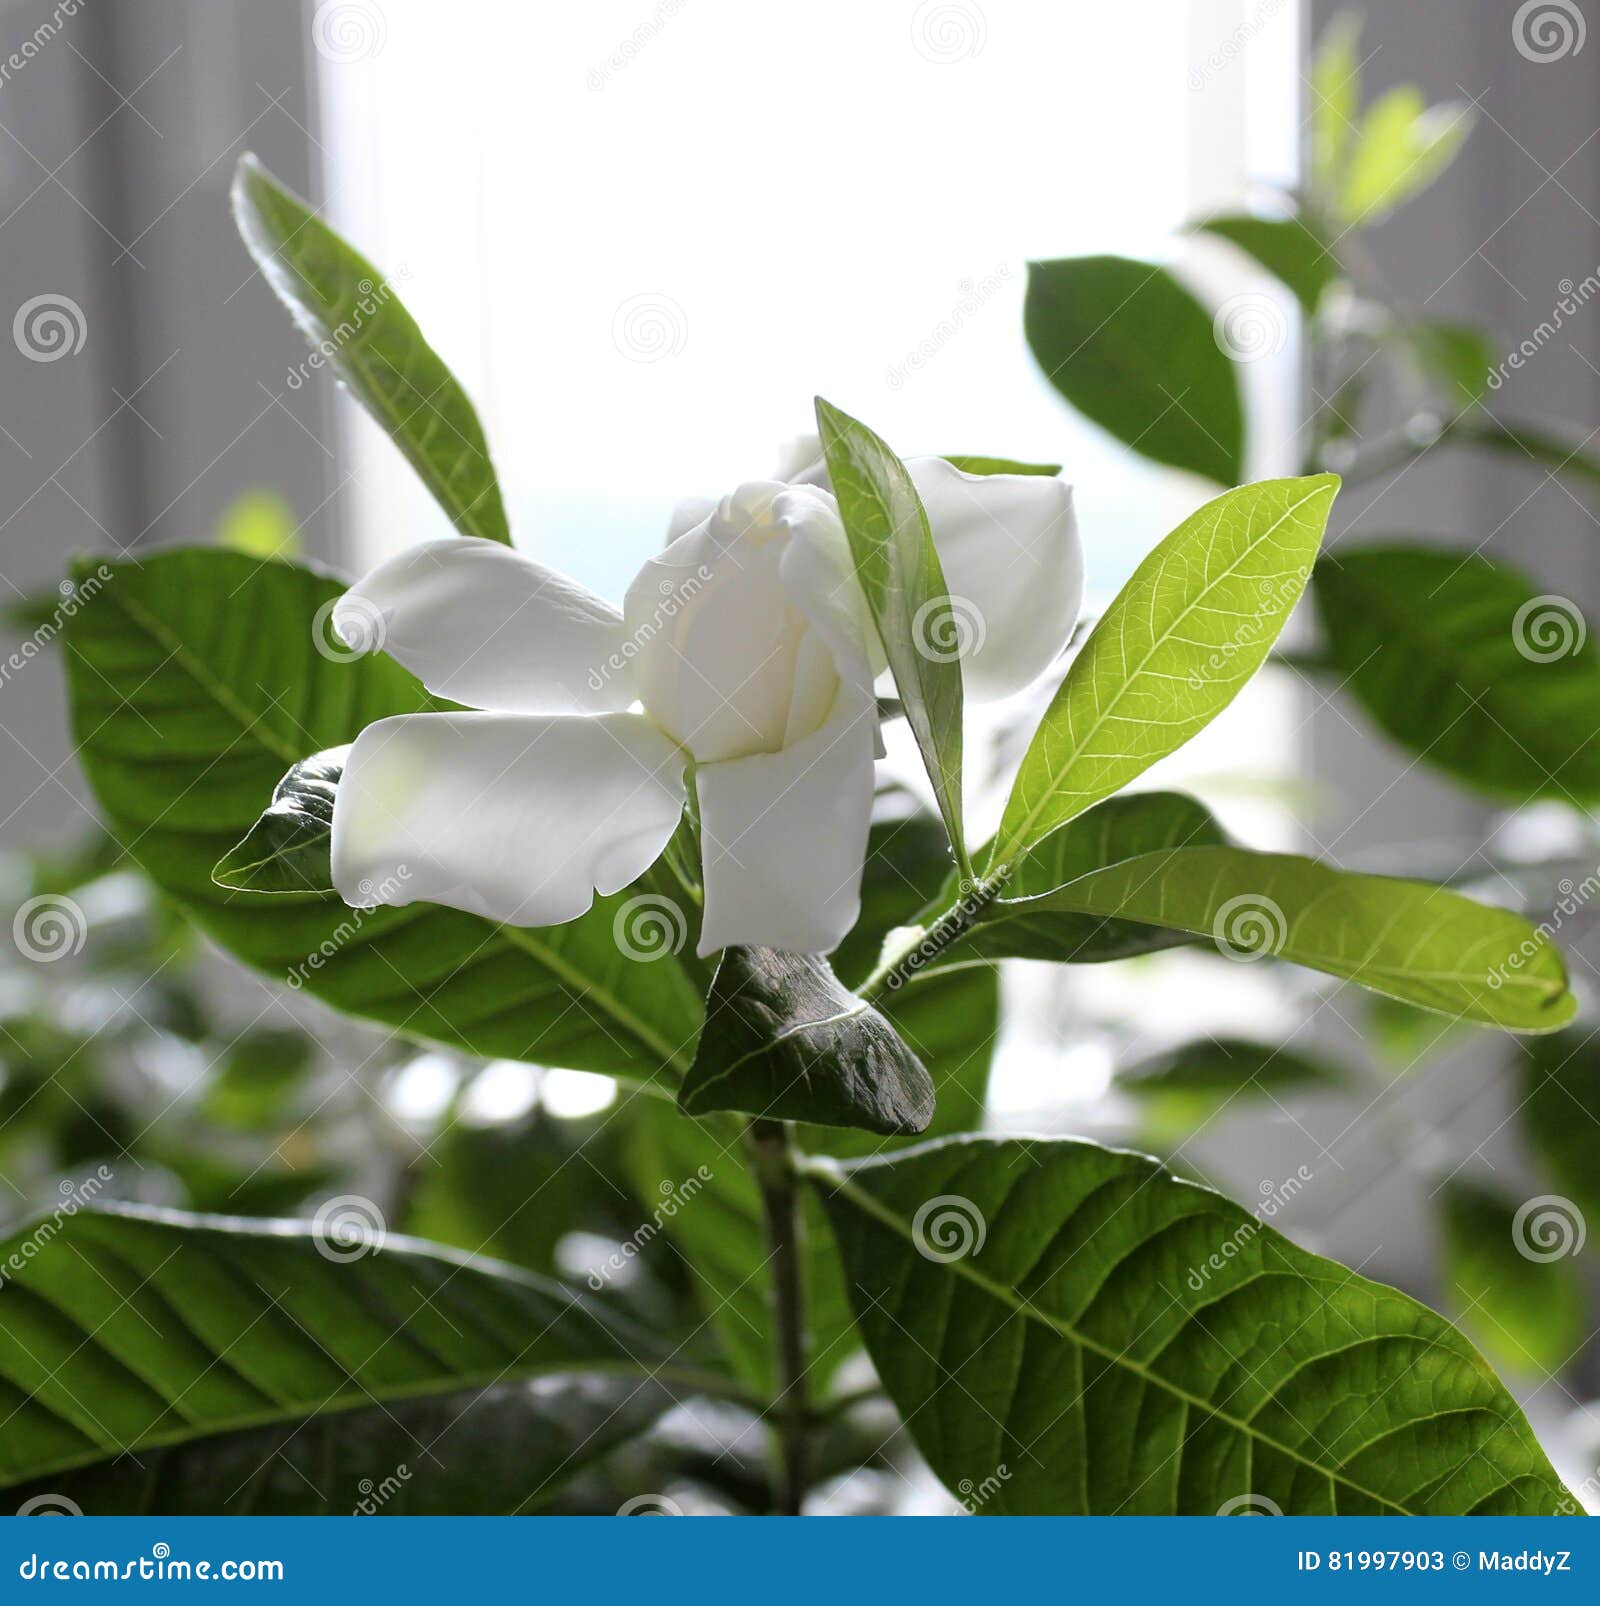 beautiful gardenia jasminoides flower